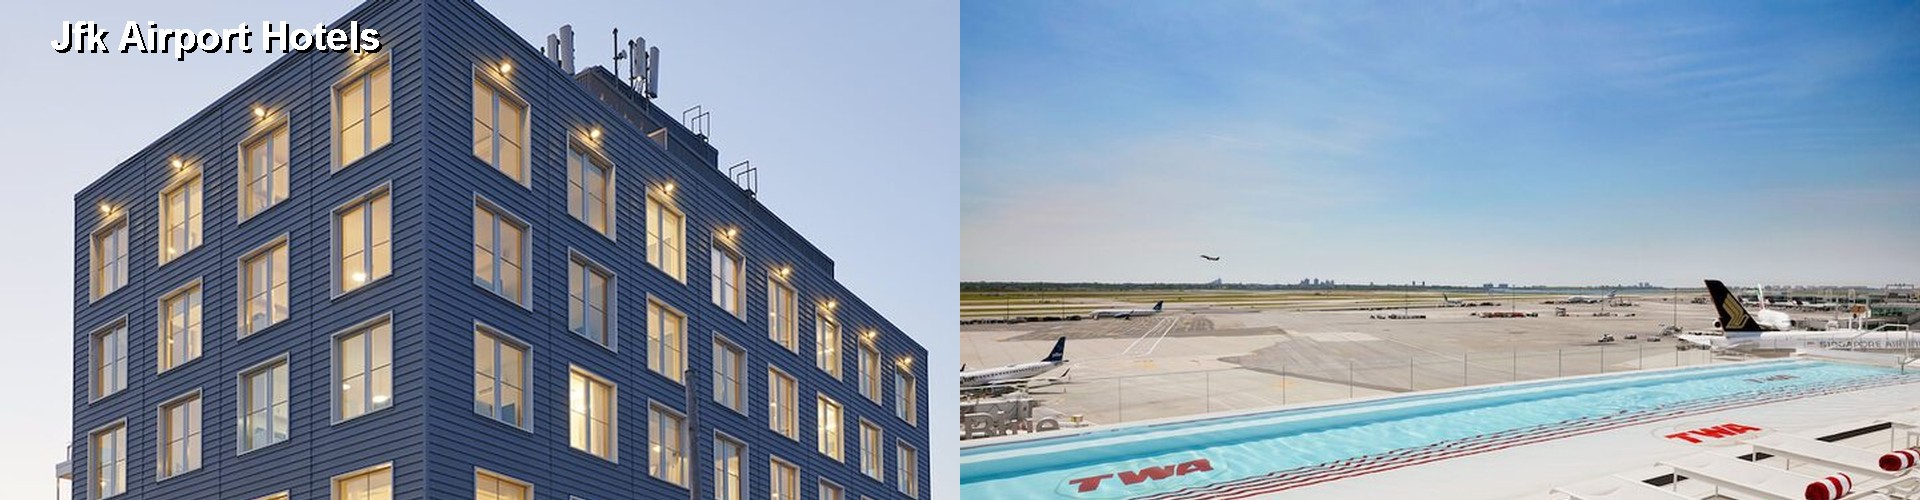 4 Best Hotels near Jfk Airport